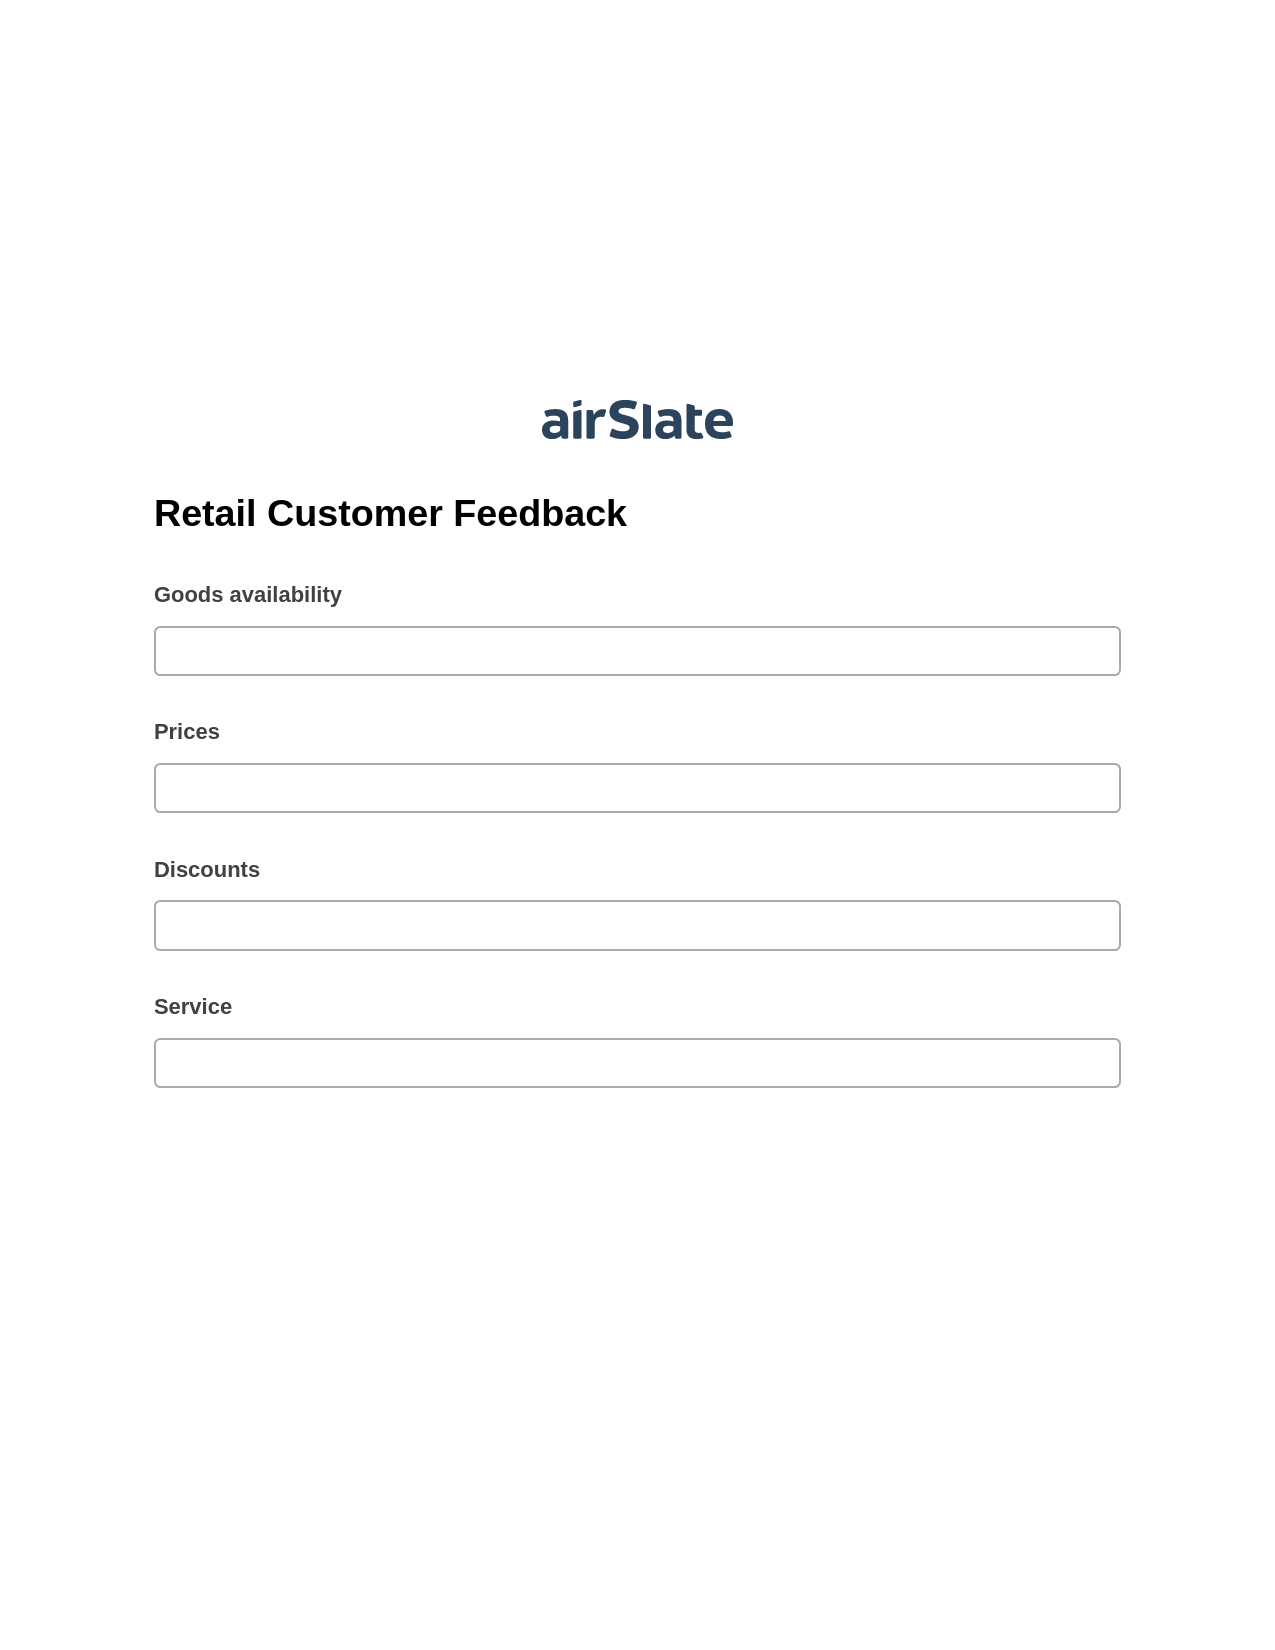 Retail Customer Feedback Pre-fill from CSV File Bot, Slack Notification Bot, Google Drive Bot